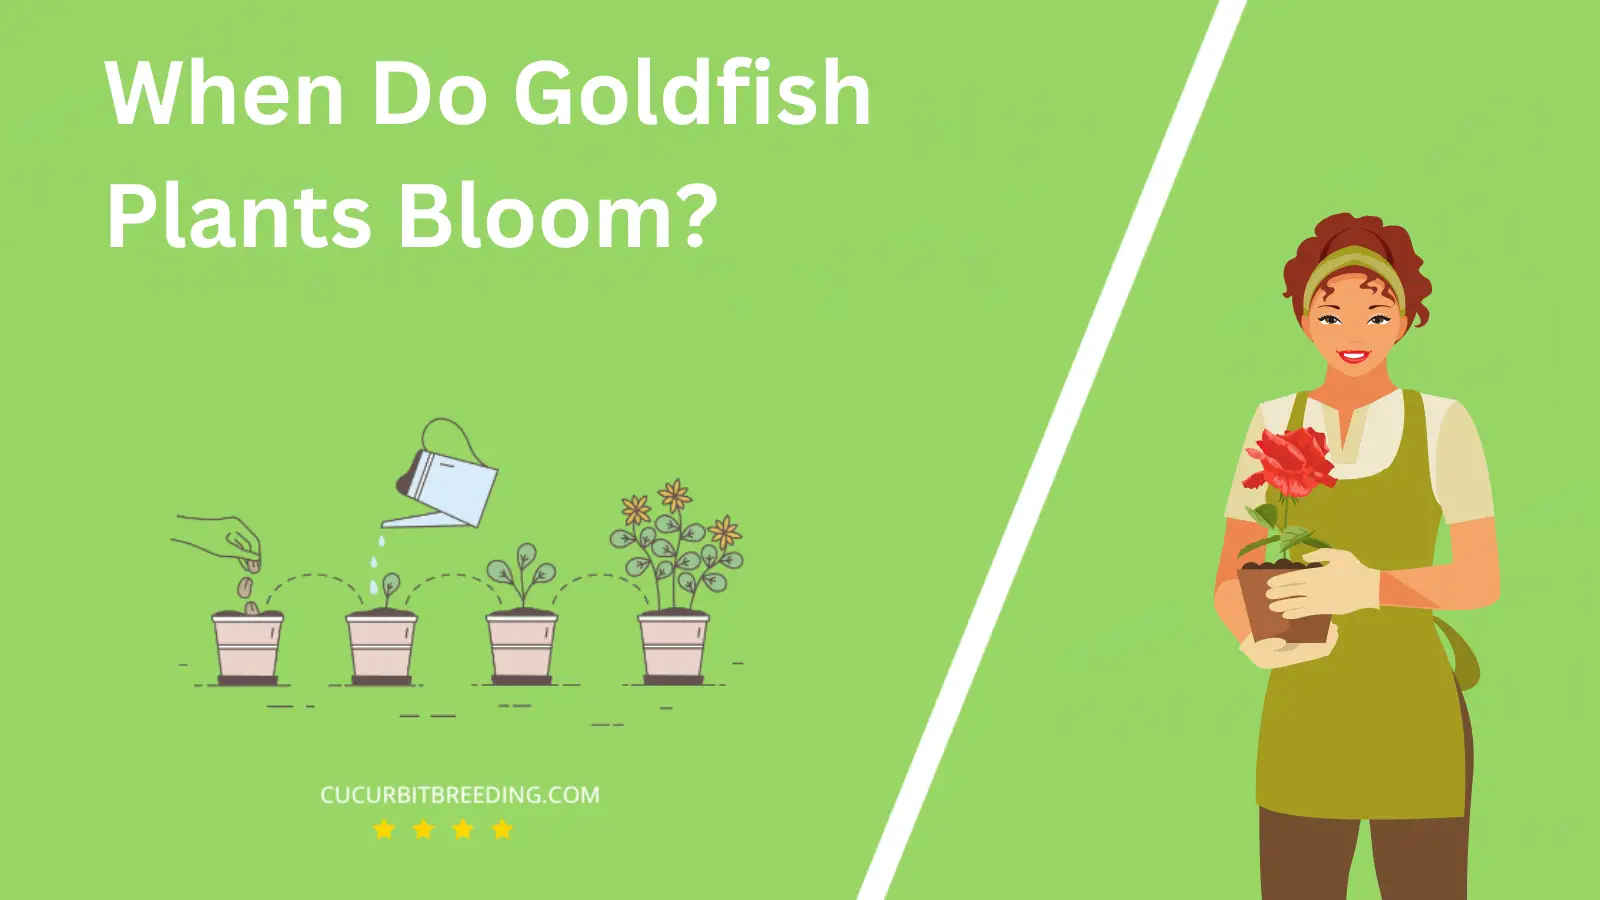 When Do Goldfish Plants Bloom?